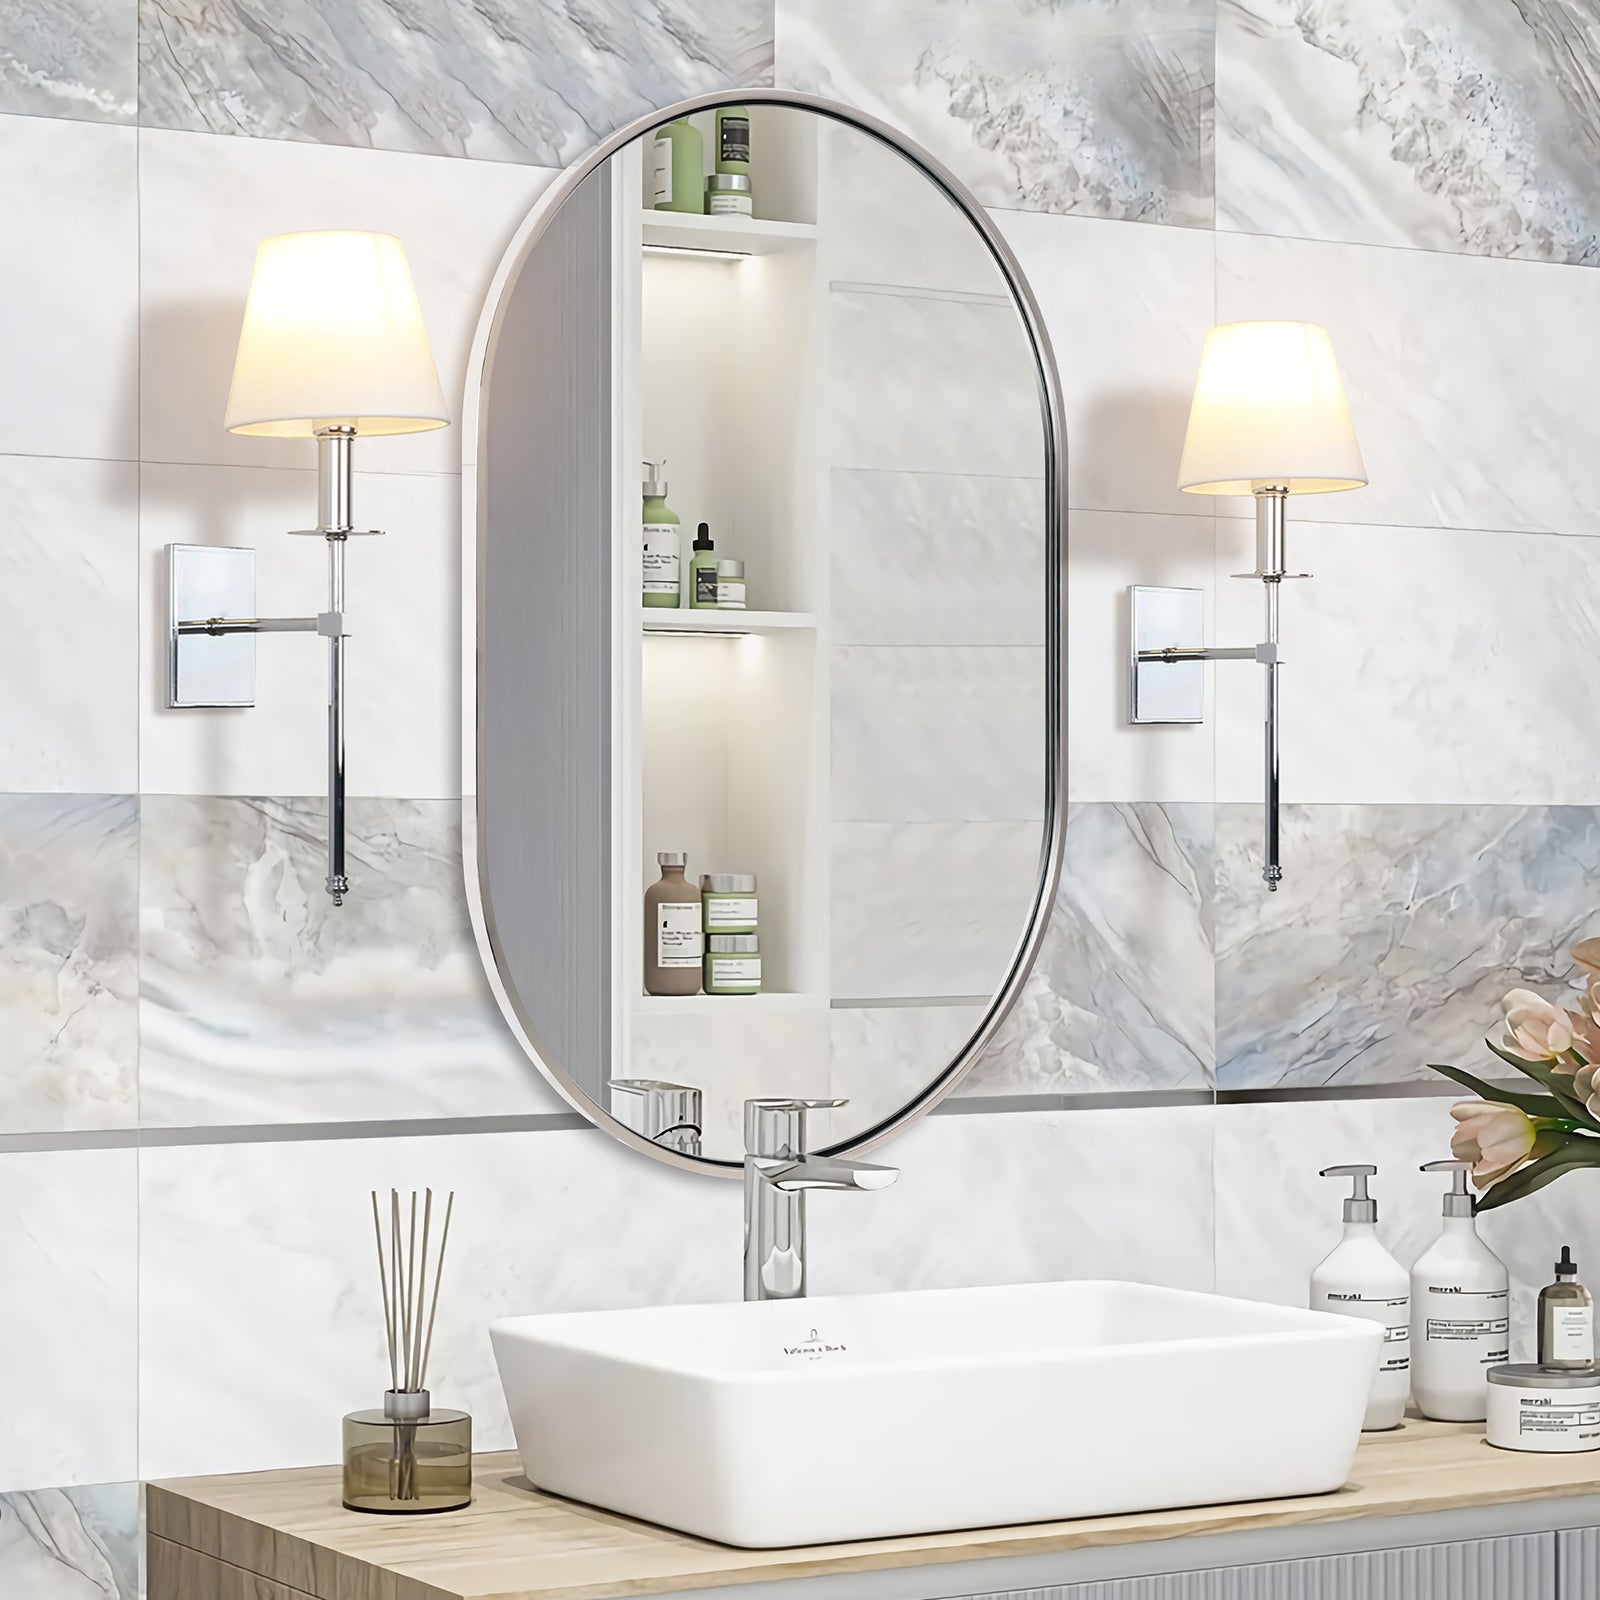 Iron Pill Shaped Bathroom Mirrors